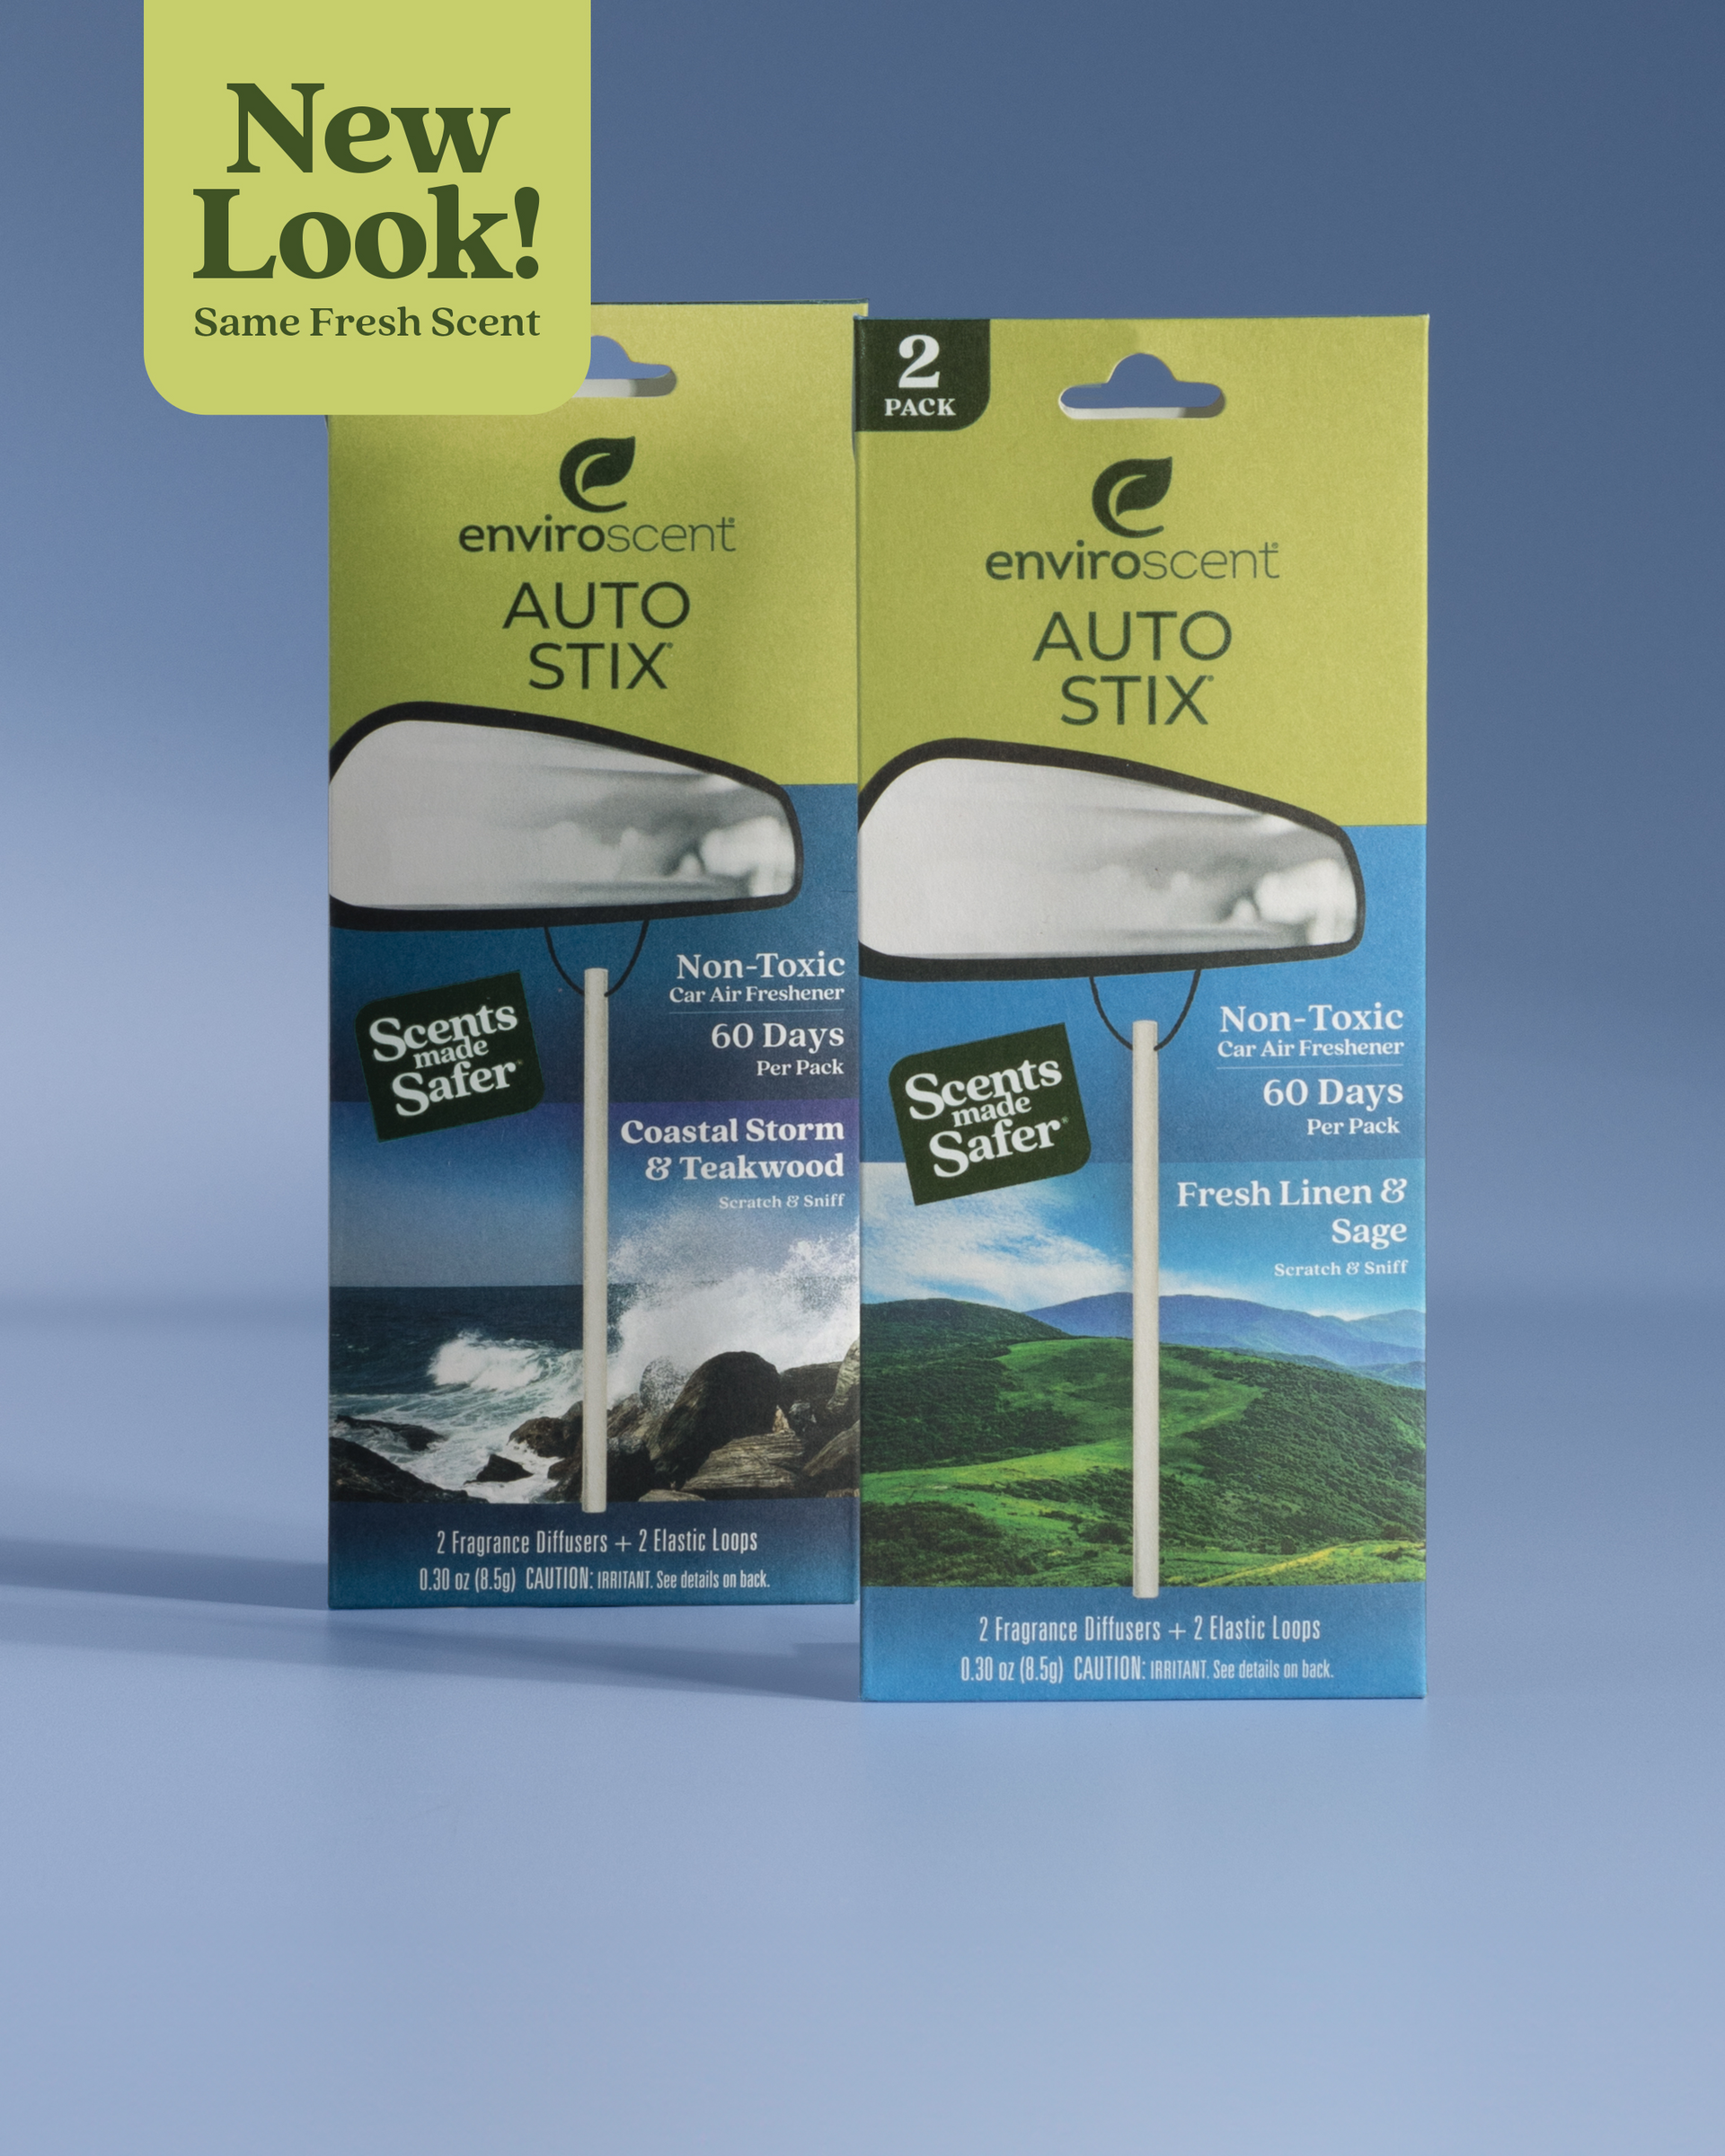 Auto Stix bundle in packaging